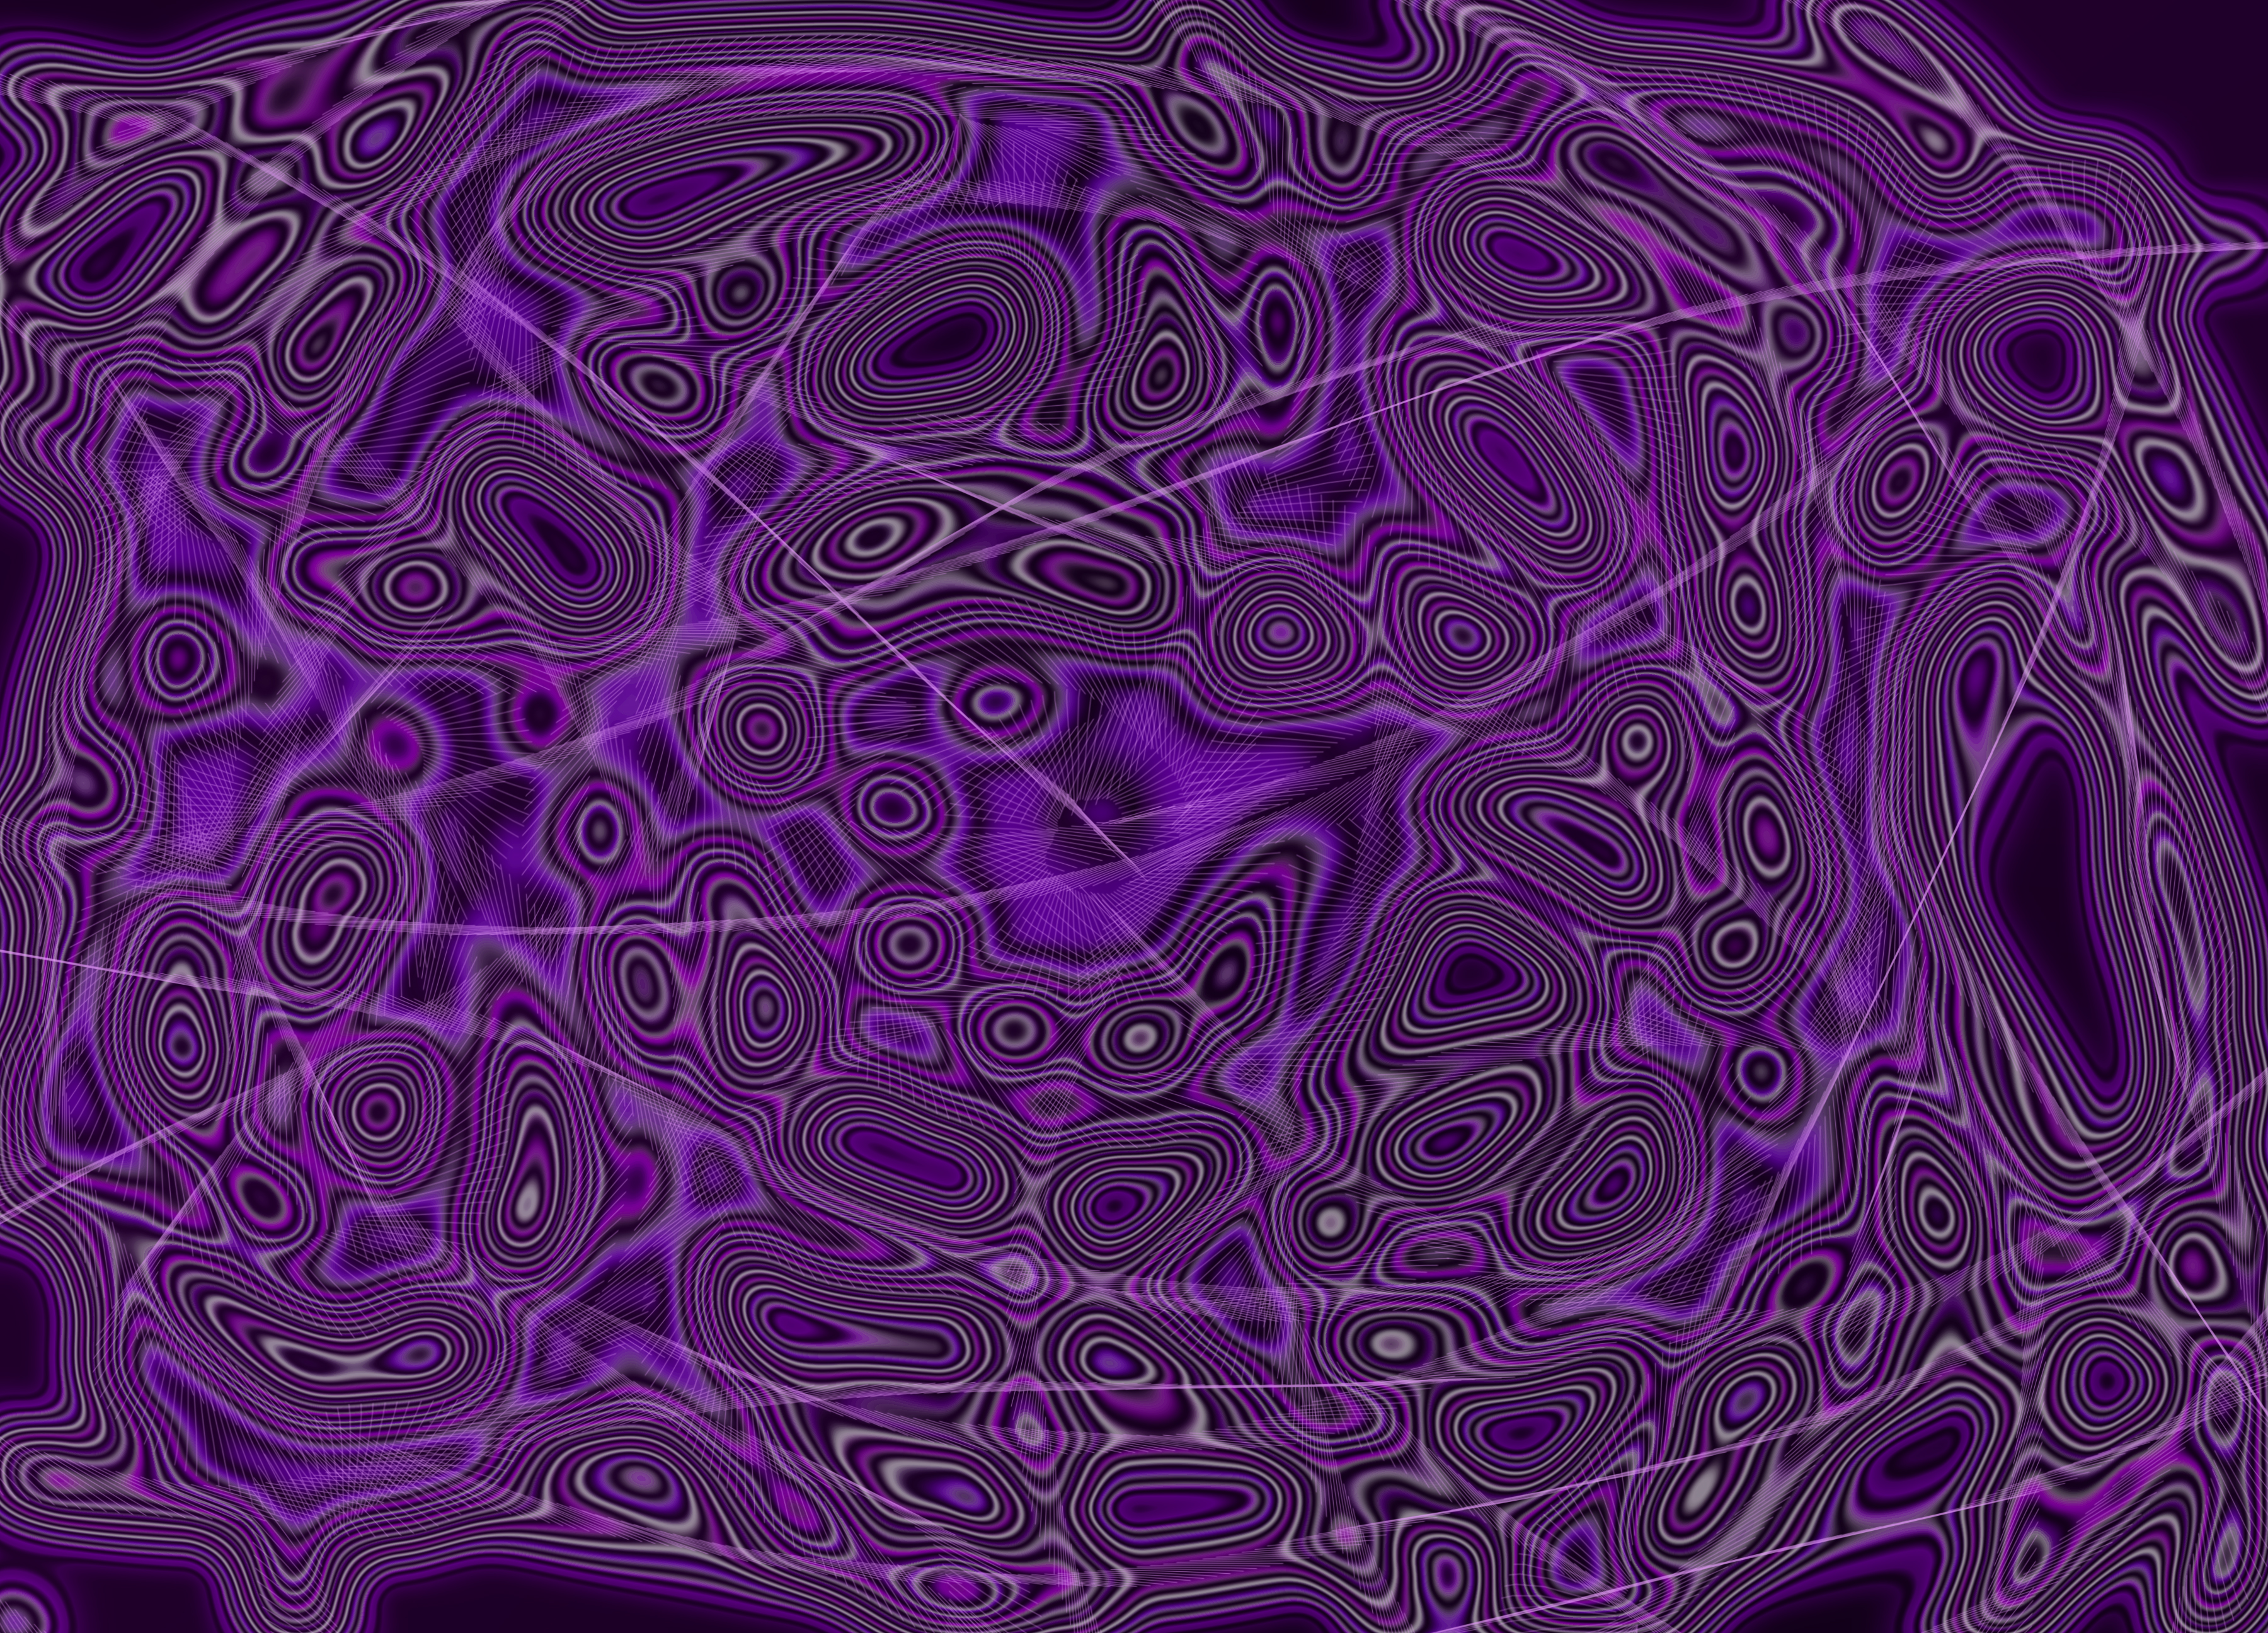 Trippy purple wallpaper by Ashleyprincess201454 on deviantART 3600x2592. 